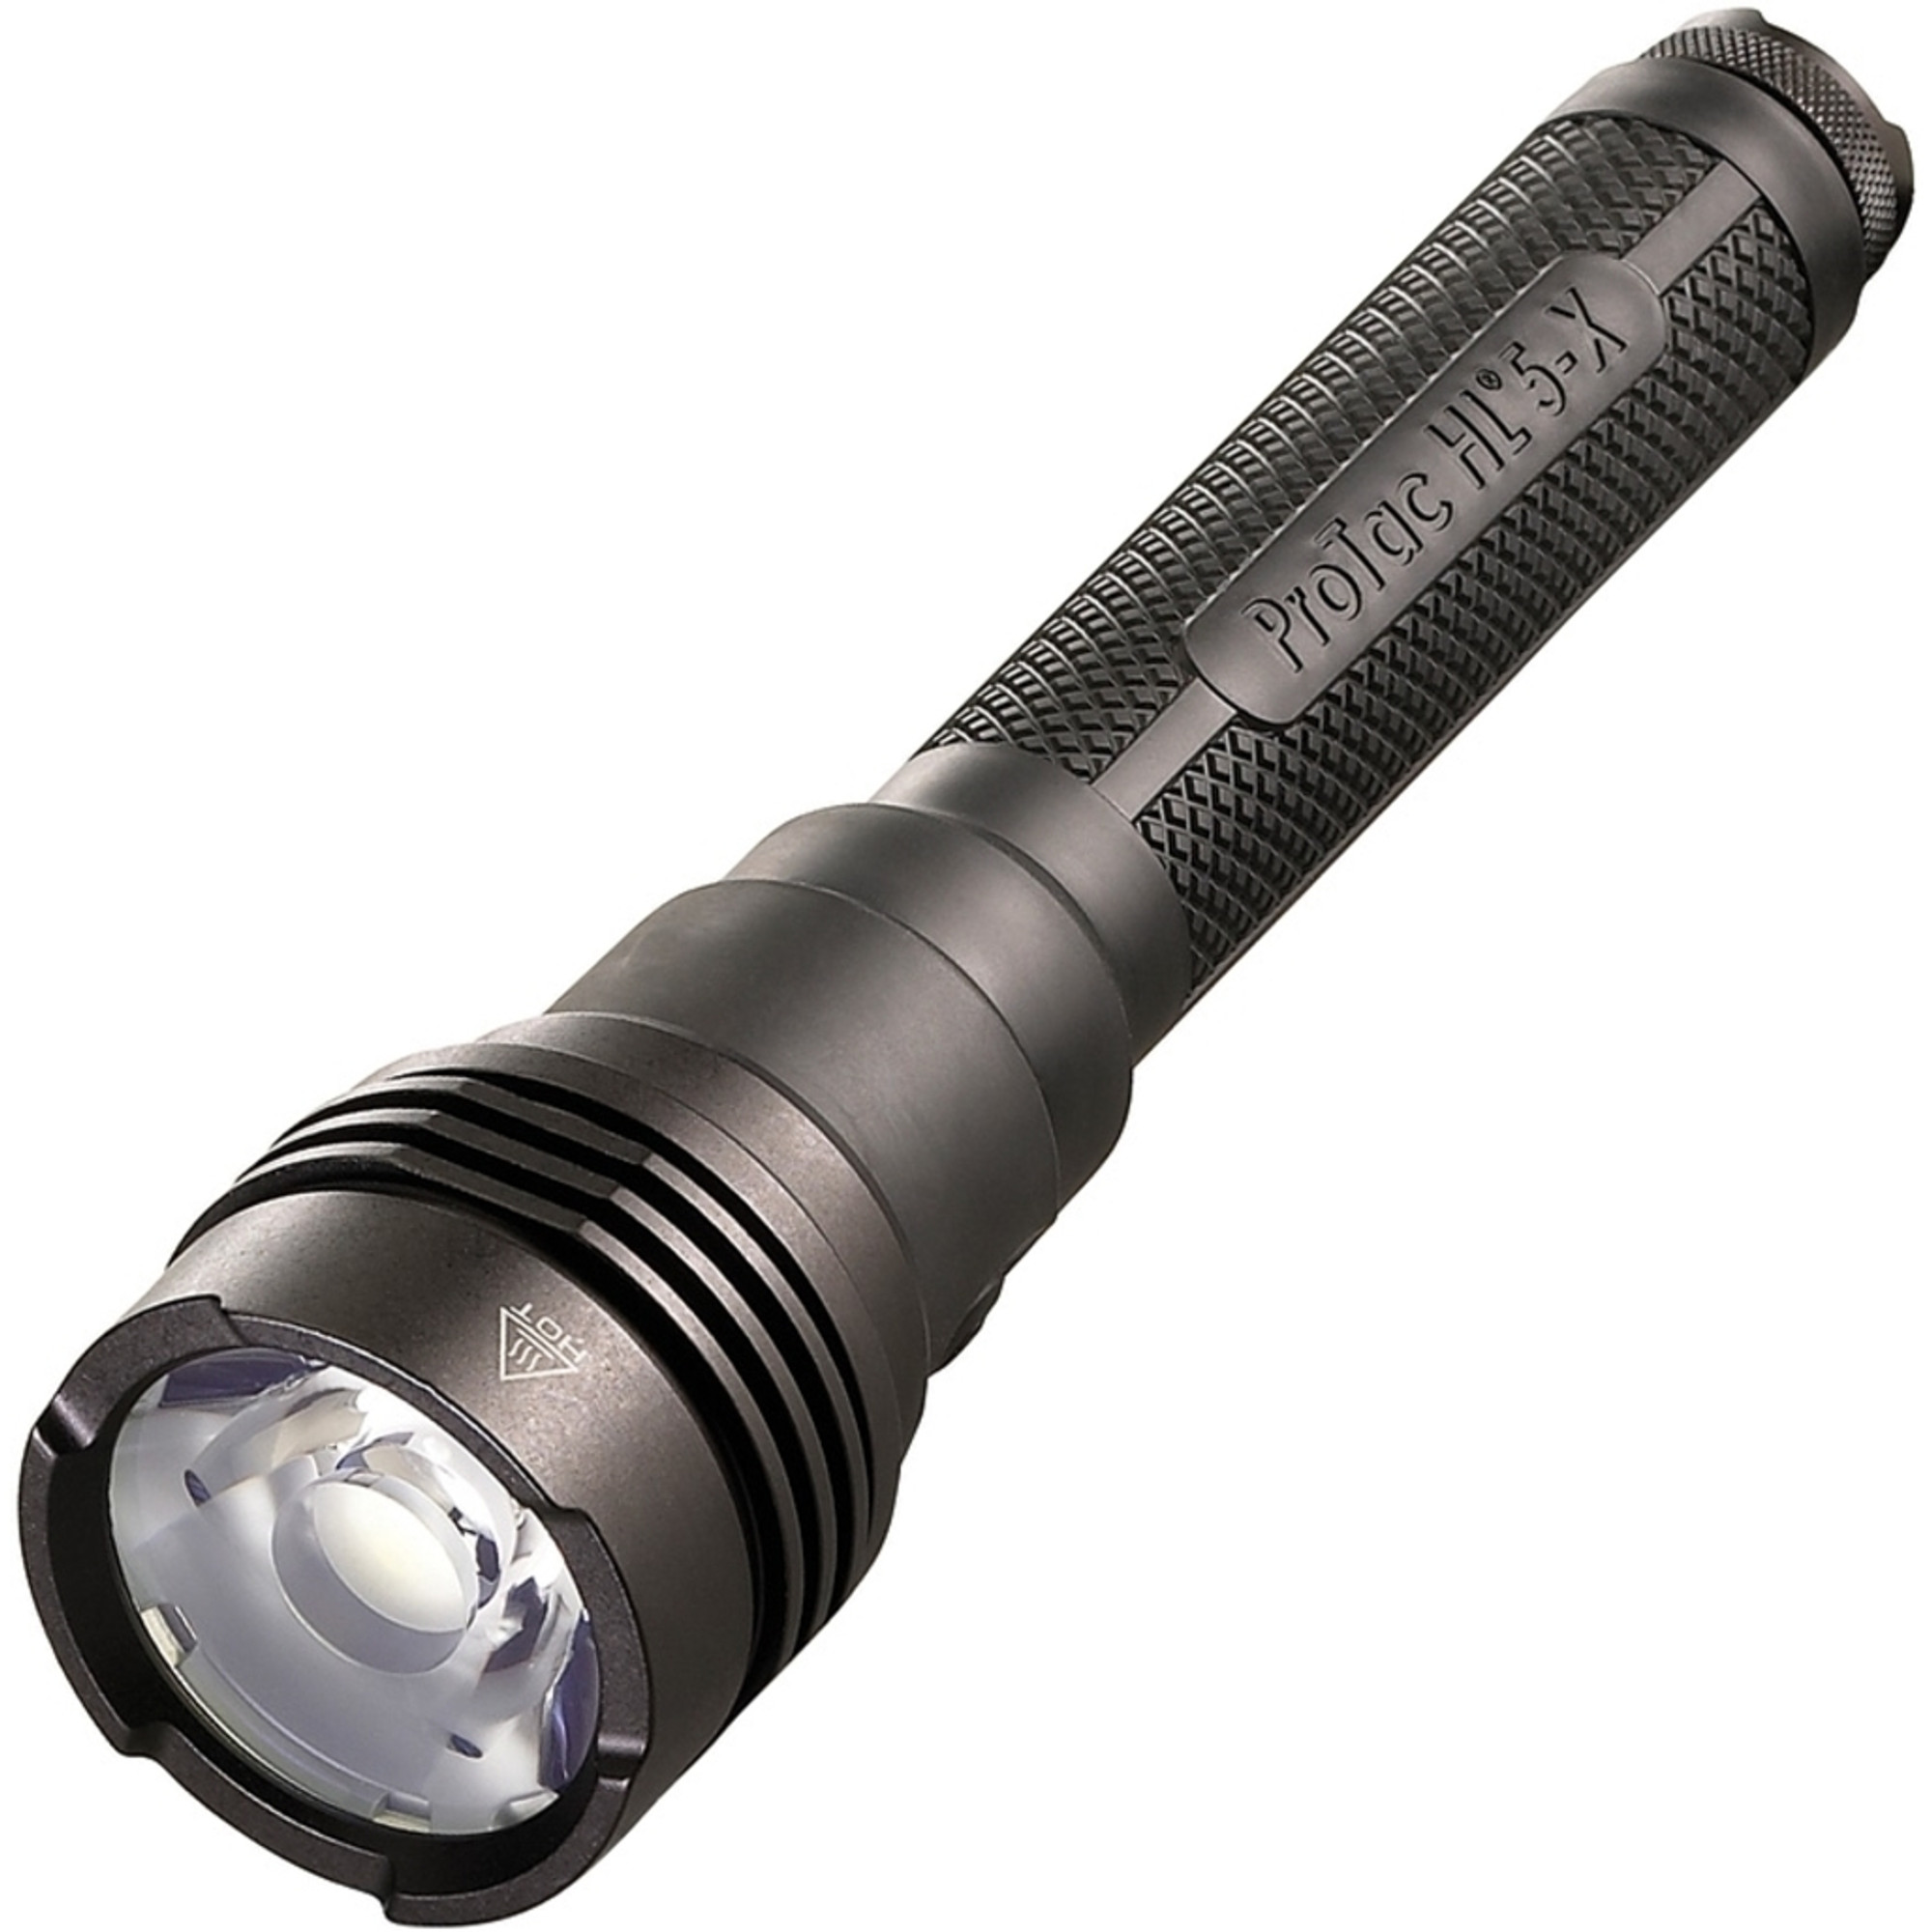 Protac HL 5-X Flashlight STR88075